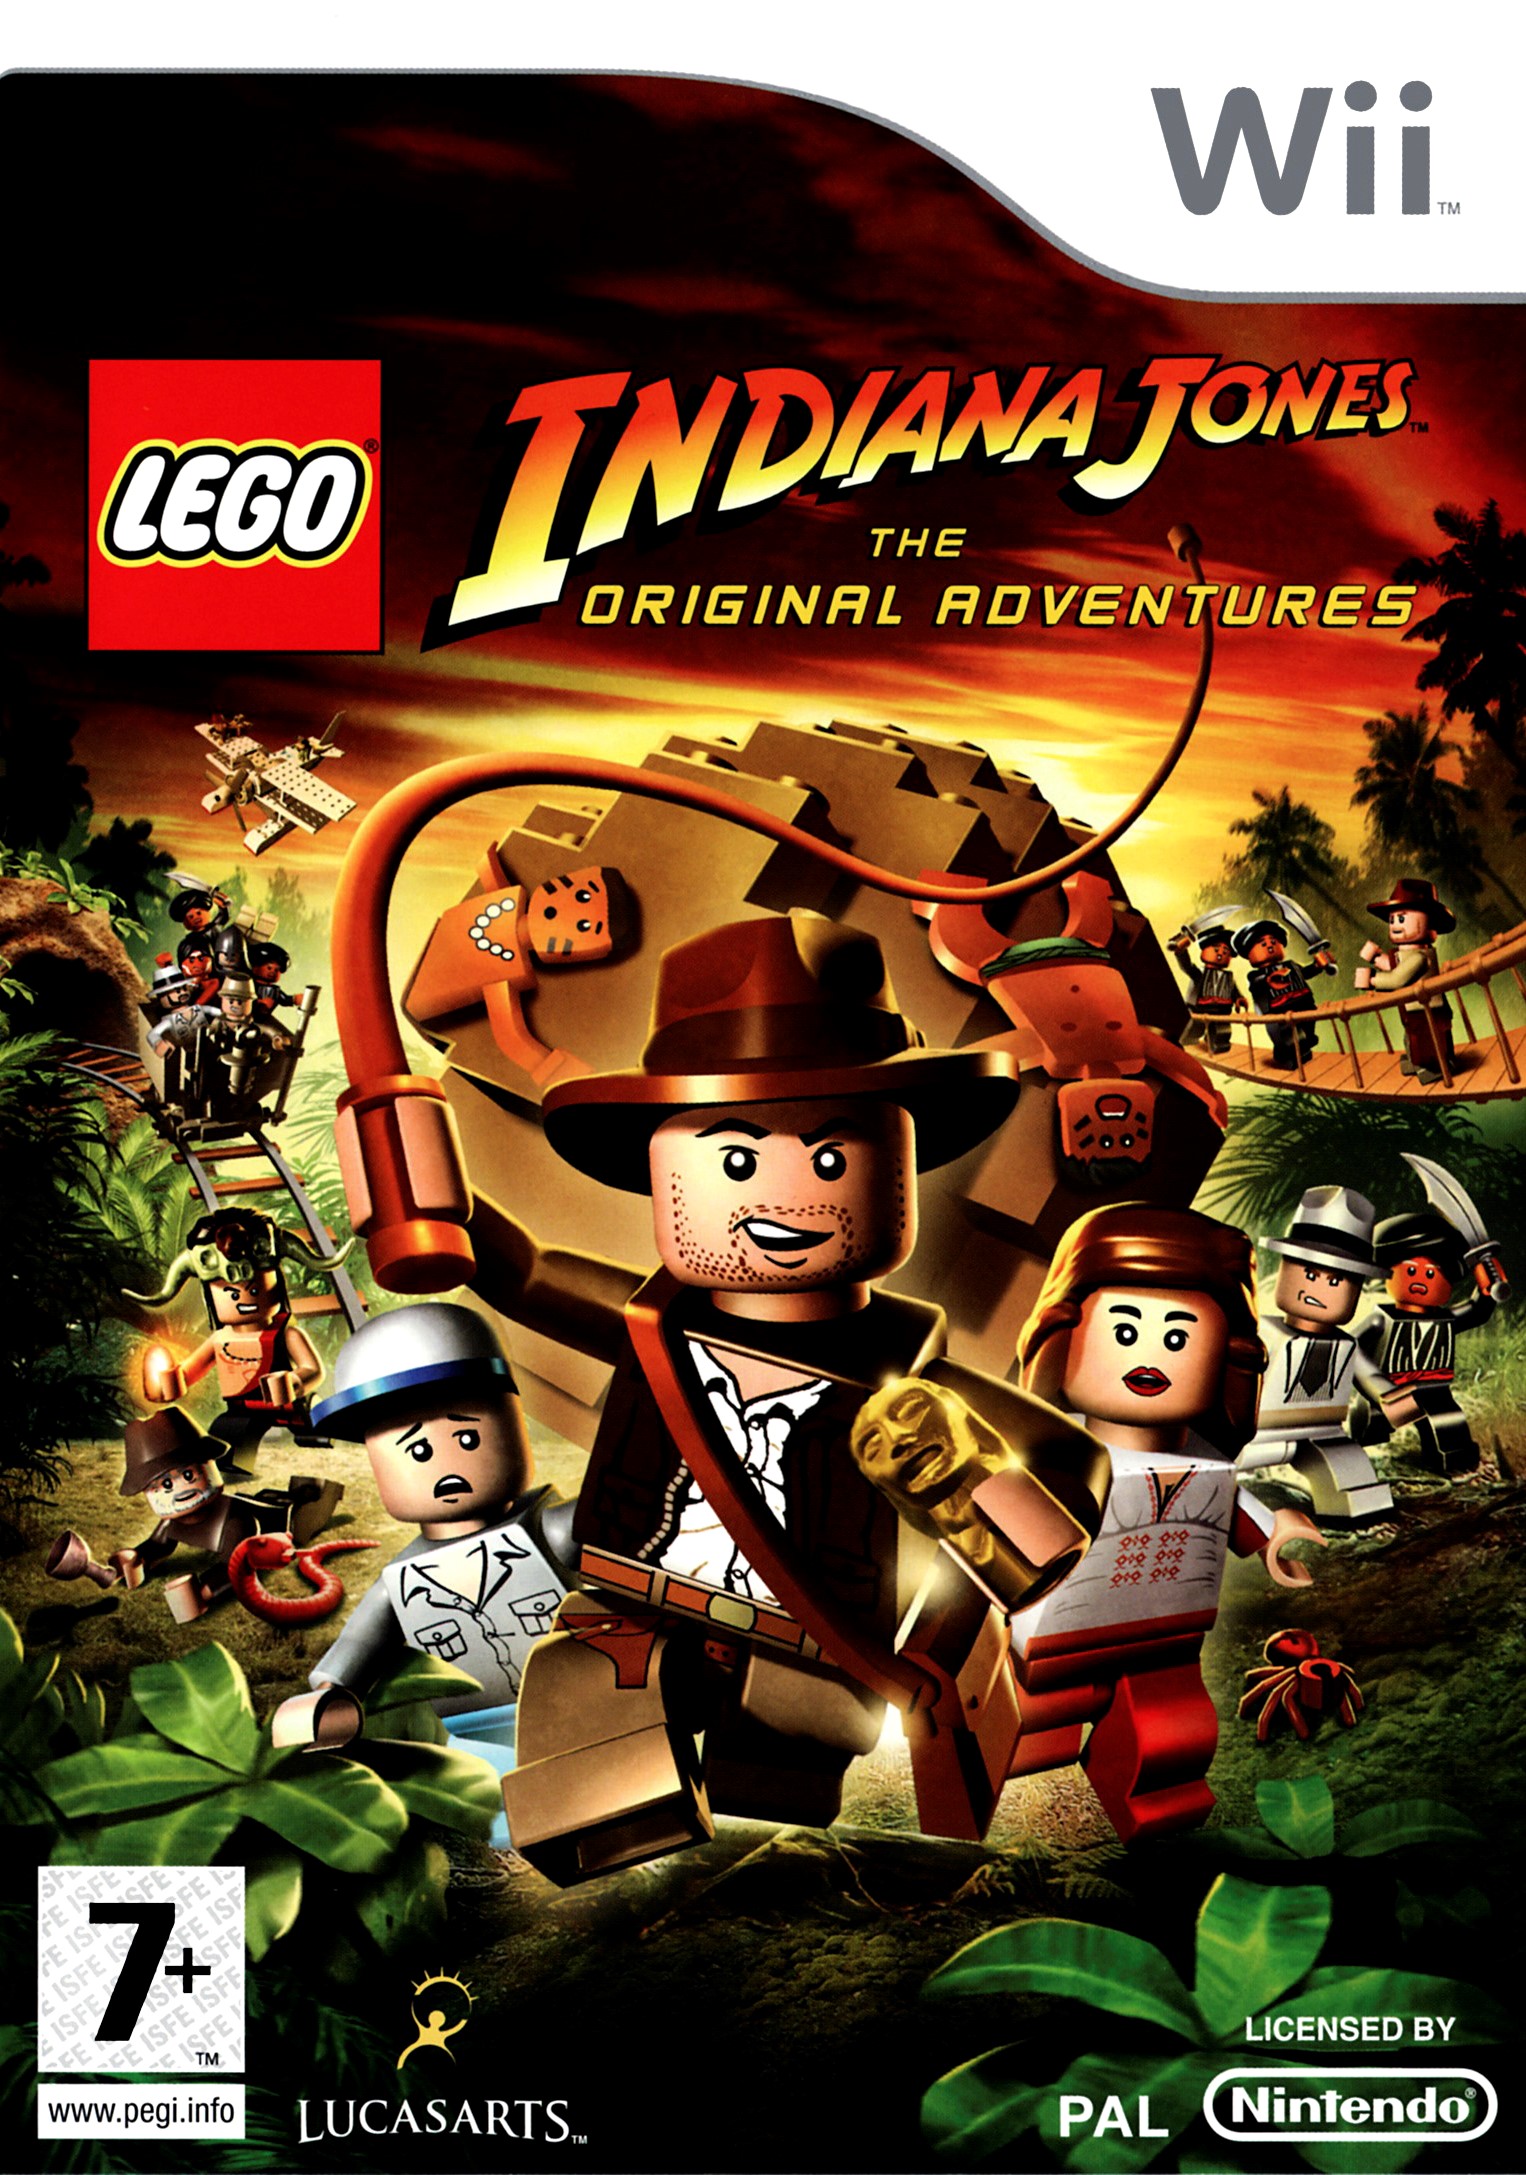 'Lego Indiana Jones: The Original Adventures'